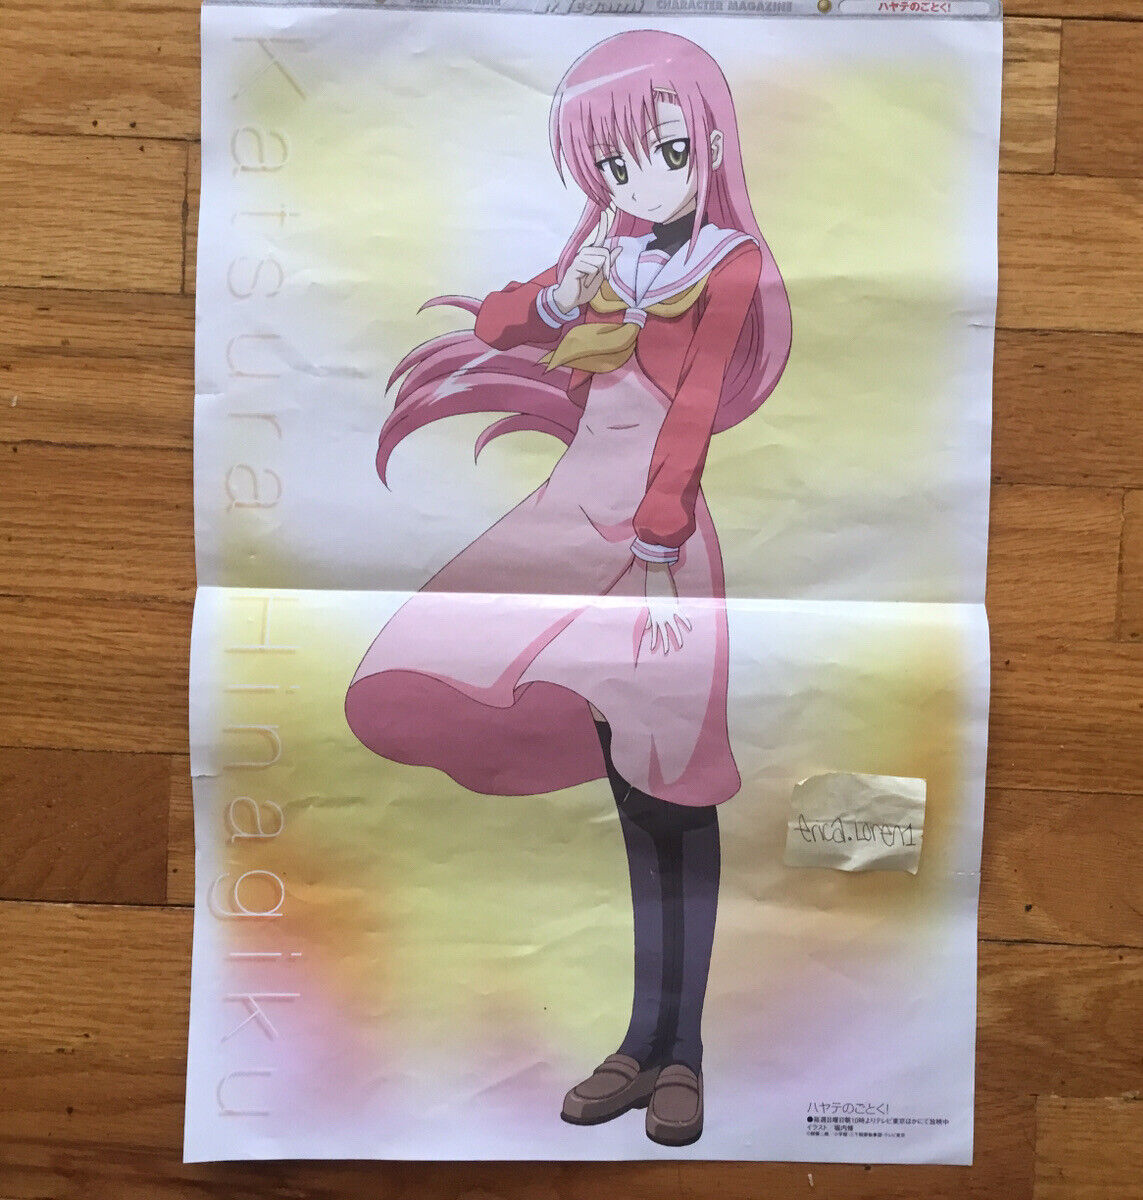 Hinagiku Katsura Hayate No Gotoku/ Sola Megami Character Magazine 2 Sided Poster